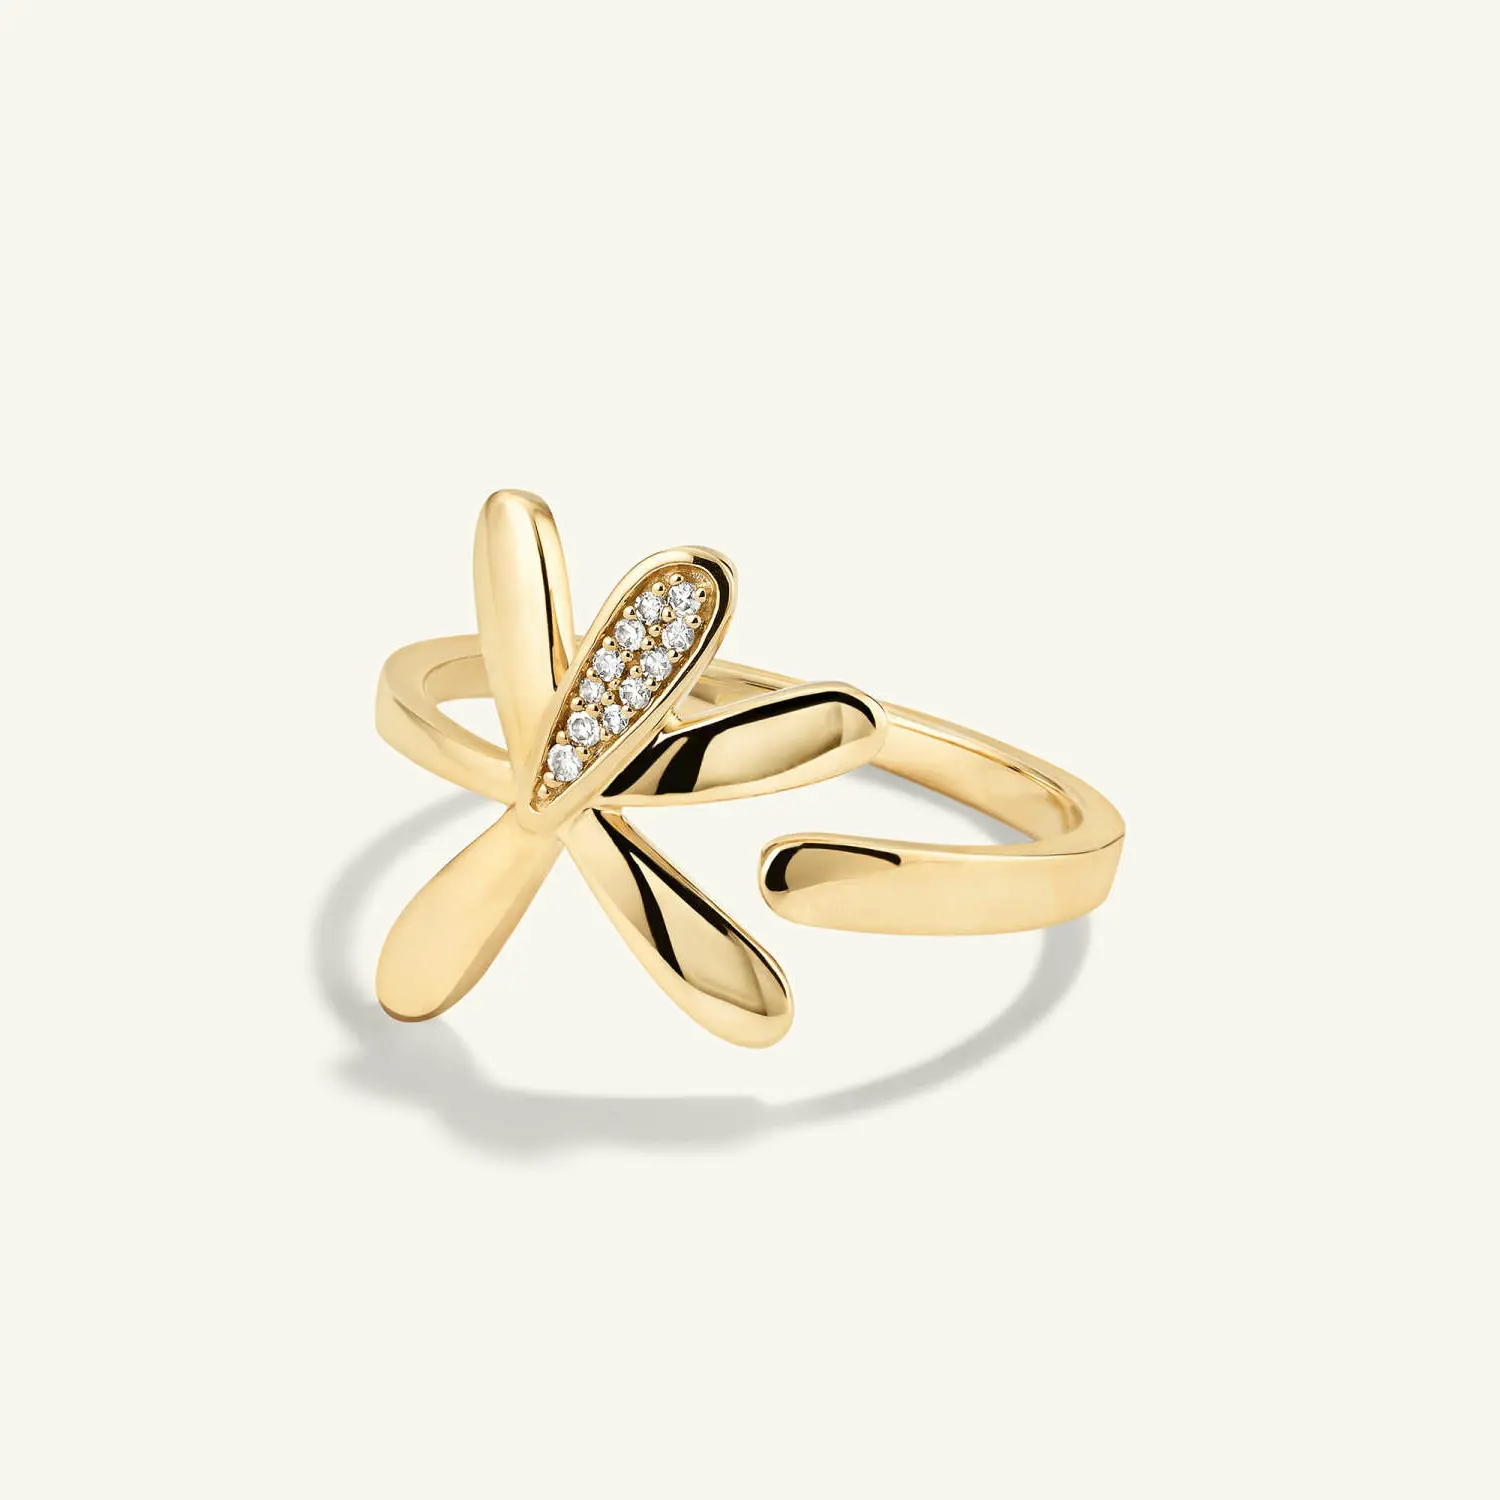 VVS2-D Moissanite Diamond Engagement Ring 14K Yellow Gold Flower Daintiy Pave Round Cut Anniversary Gift For Women Birthday Gift